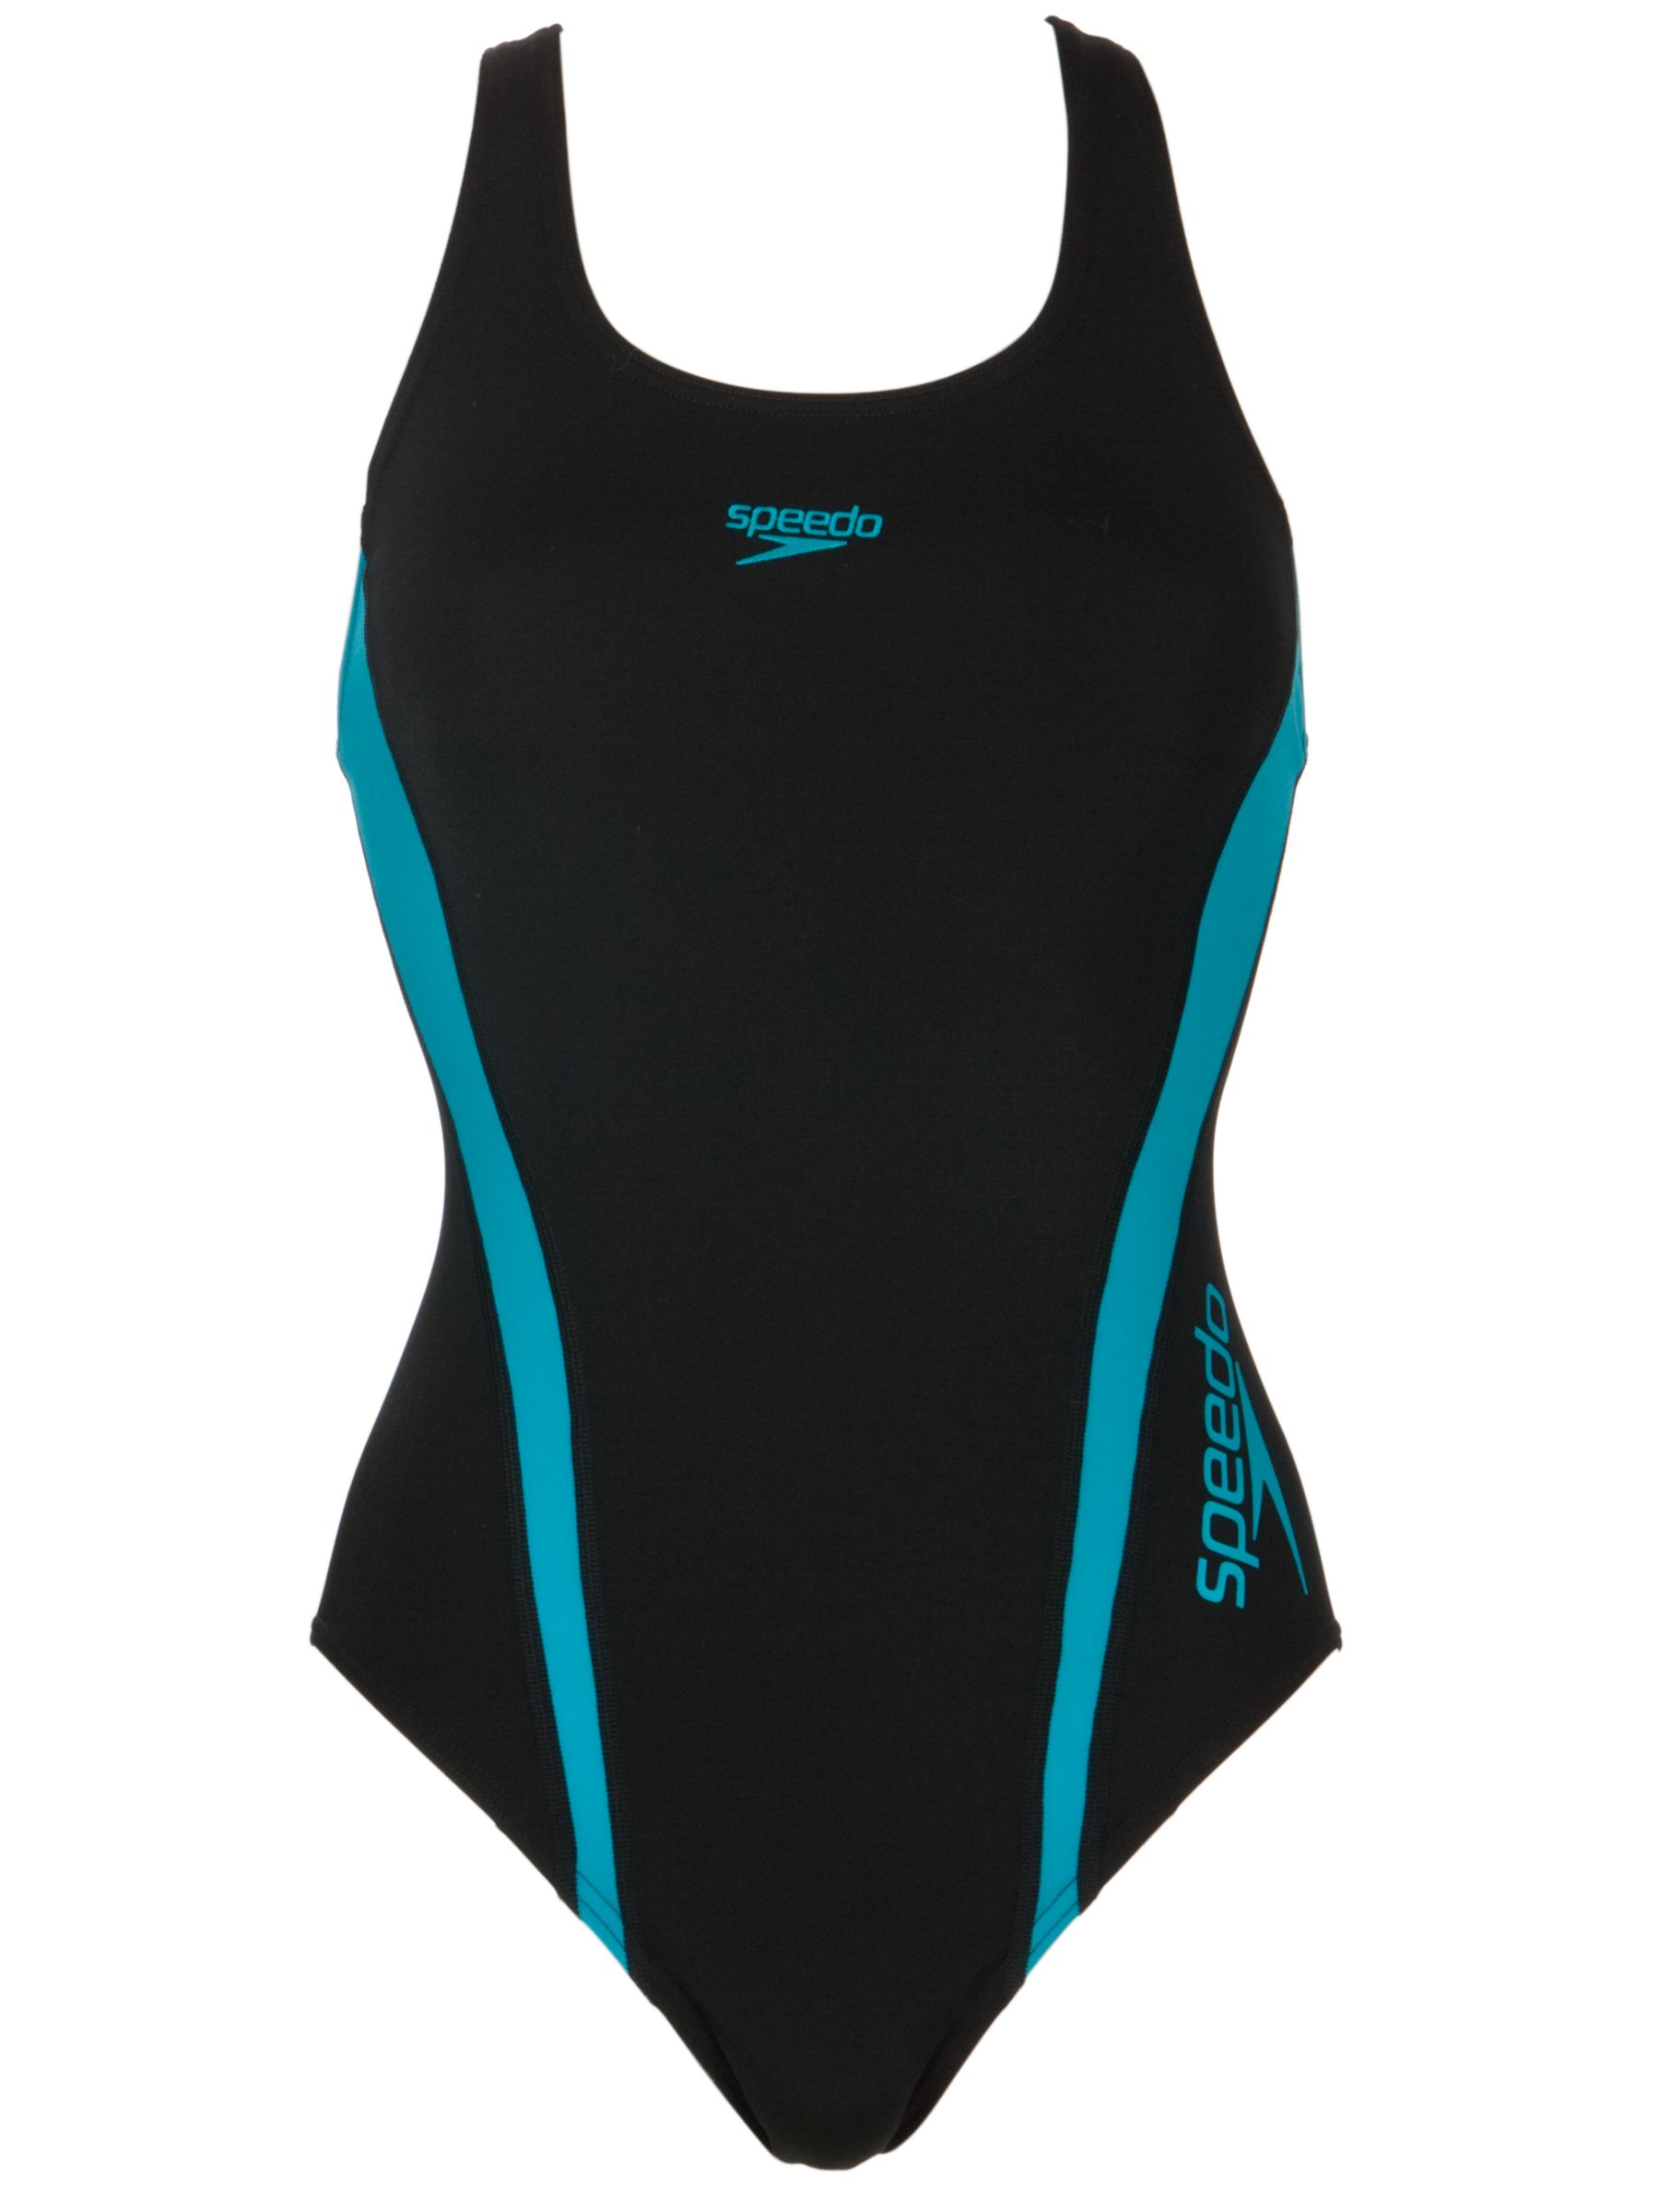 Speedo Sleek Splice Powerback Swimsuit,